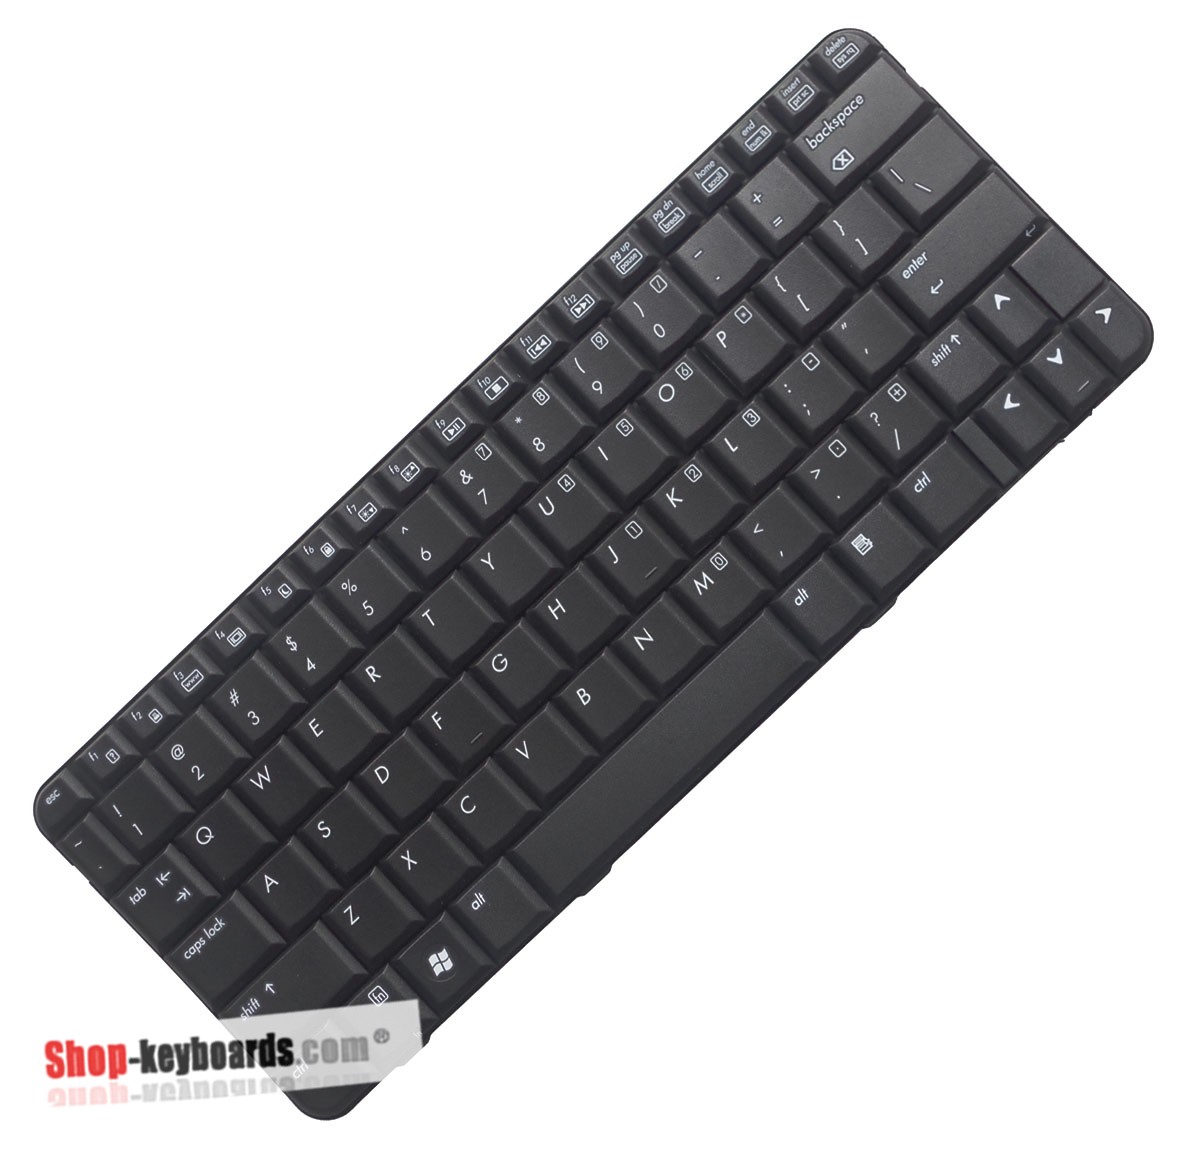 Compaq Presario CQ20-100 Keyboard replacement